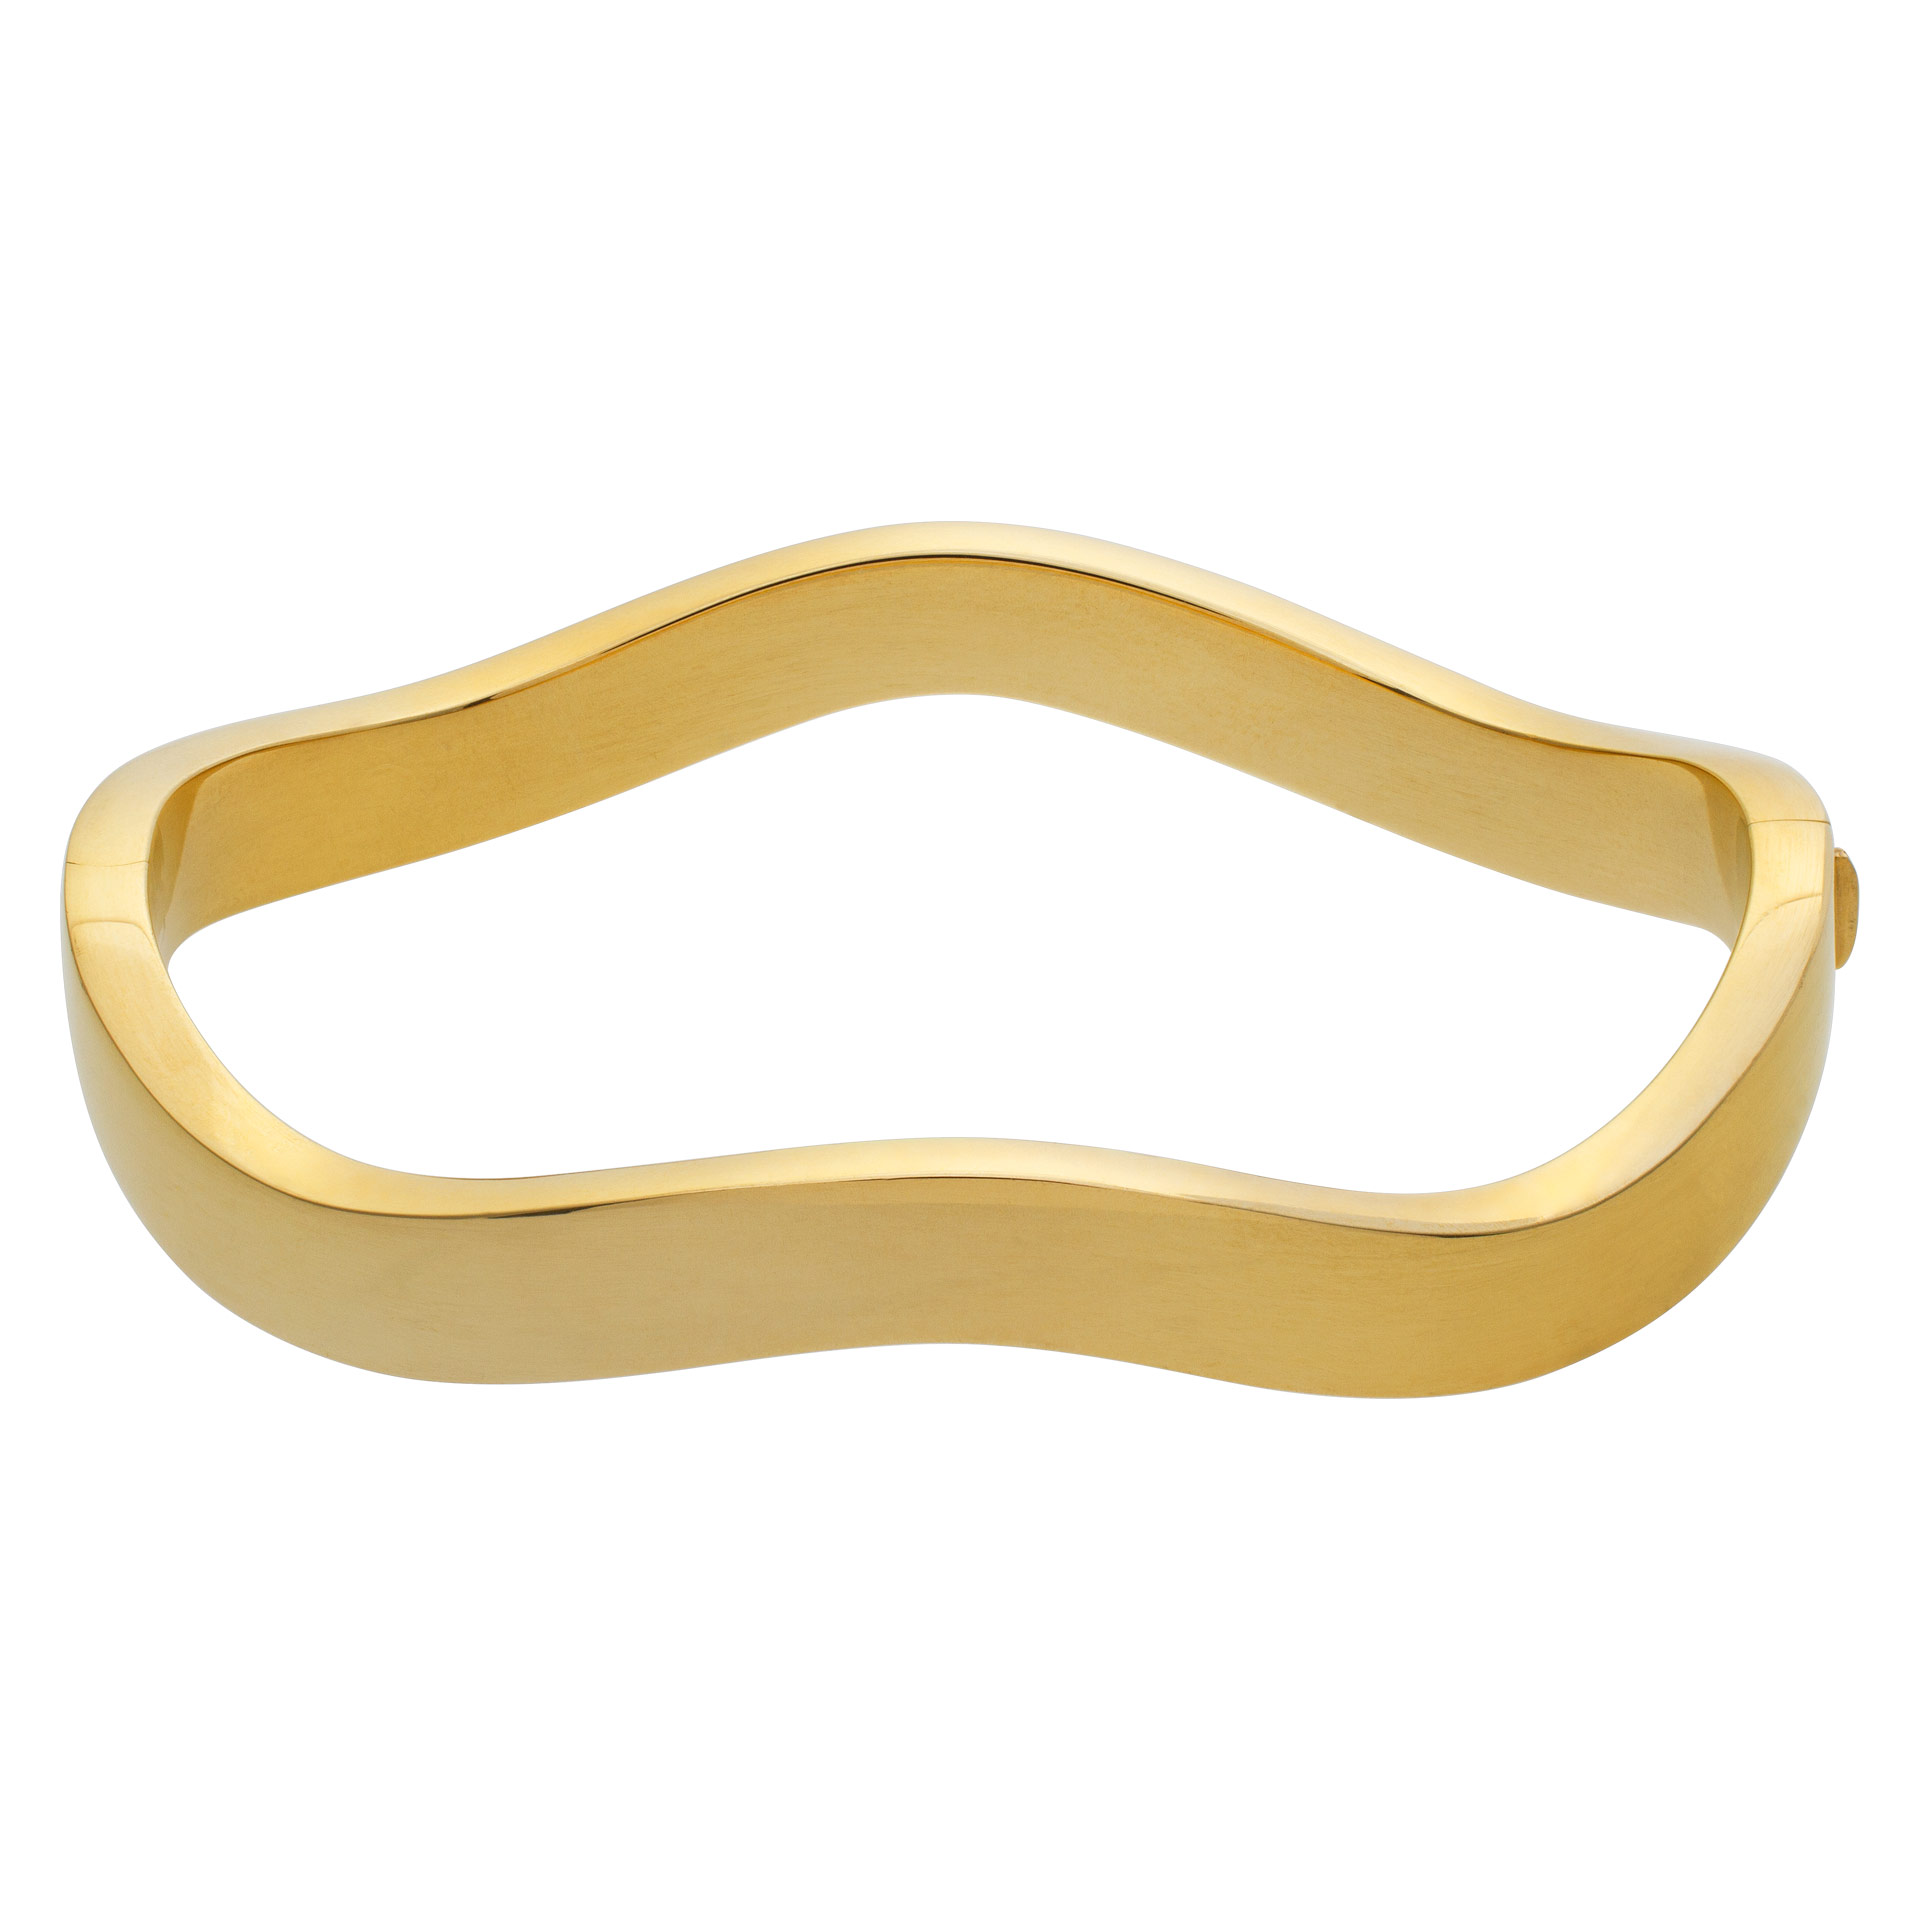 Tiffany & Co. wave bracelet in 18k yellow gold image 1